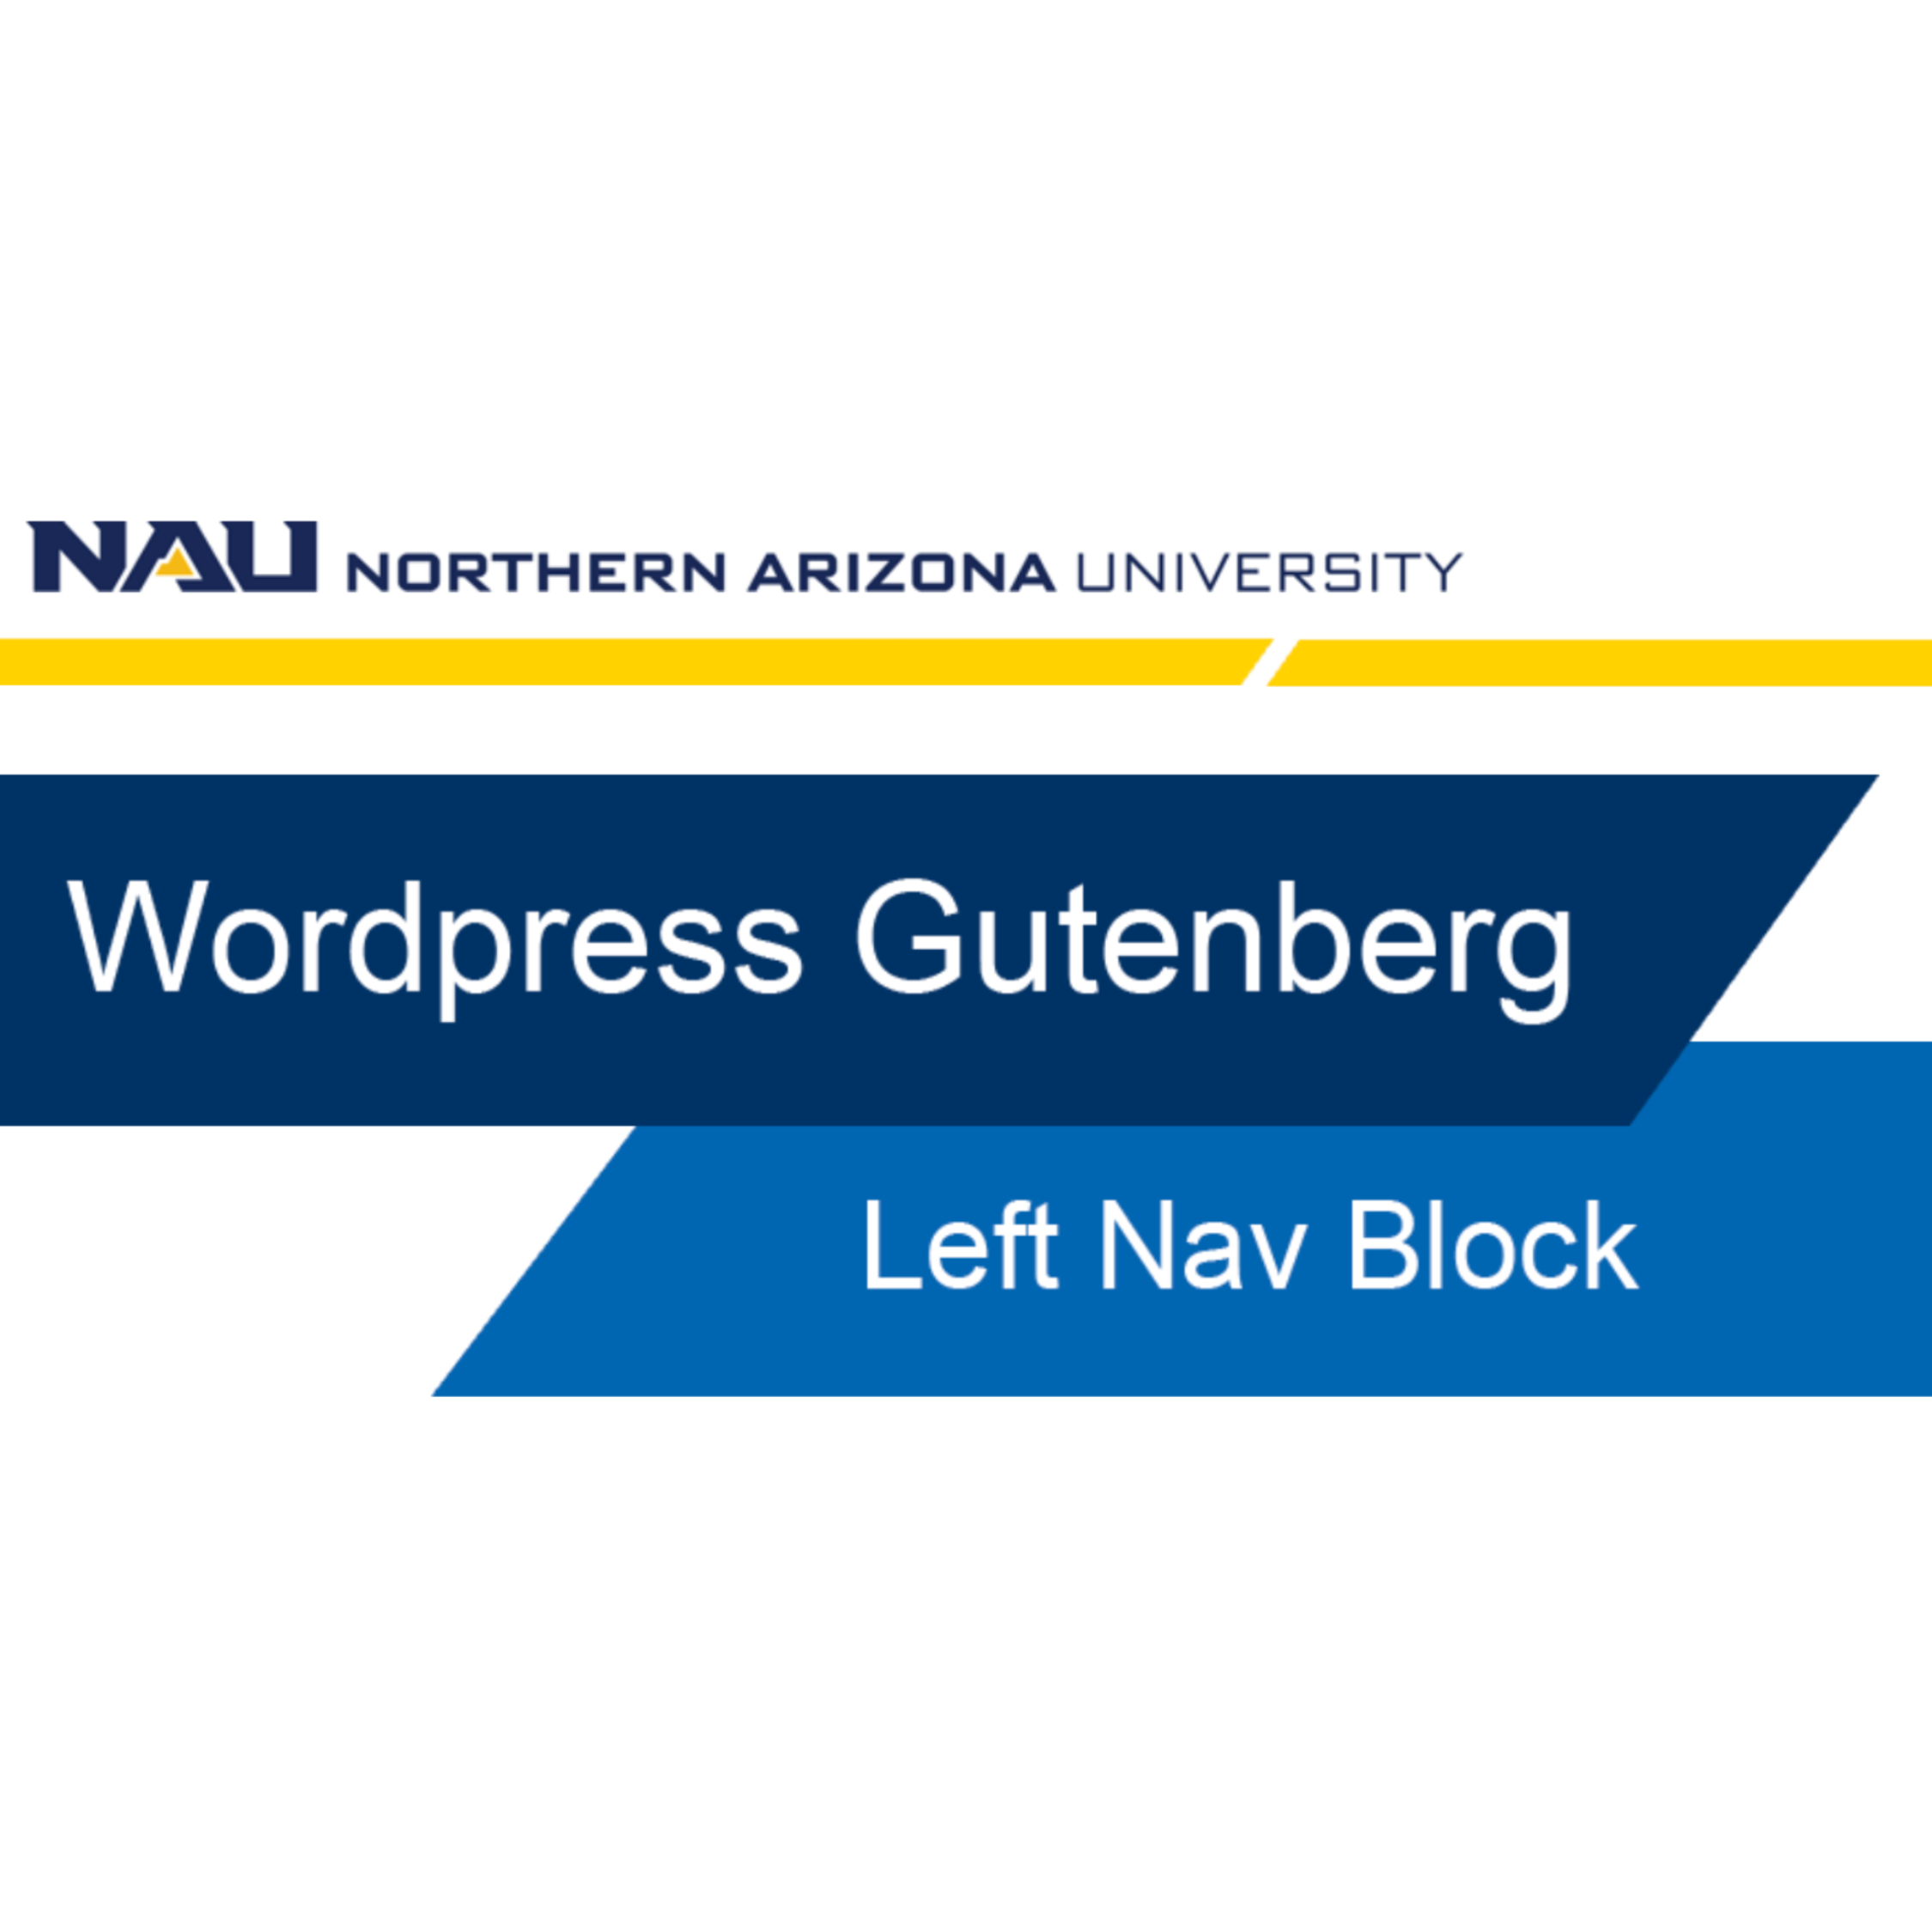 Thumbnail image of the Northern Arizona University WordPress Gutenberg tutorial start page, titled 'Left Nav Block'.